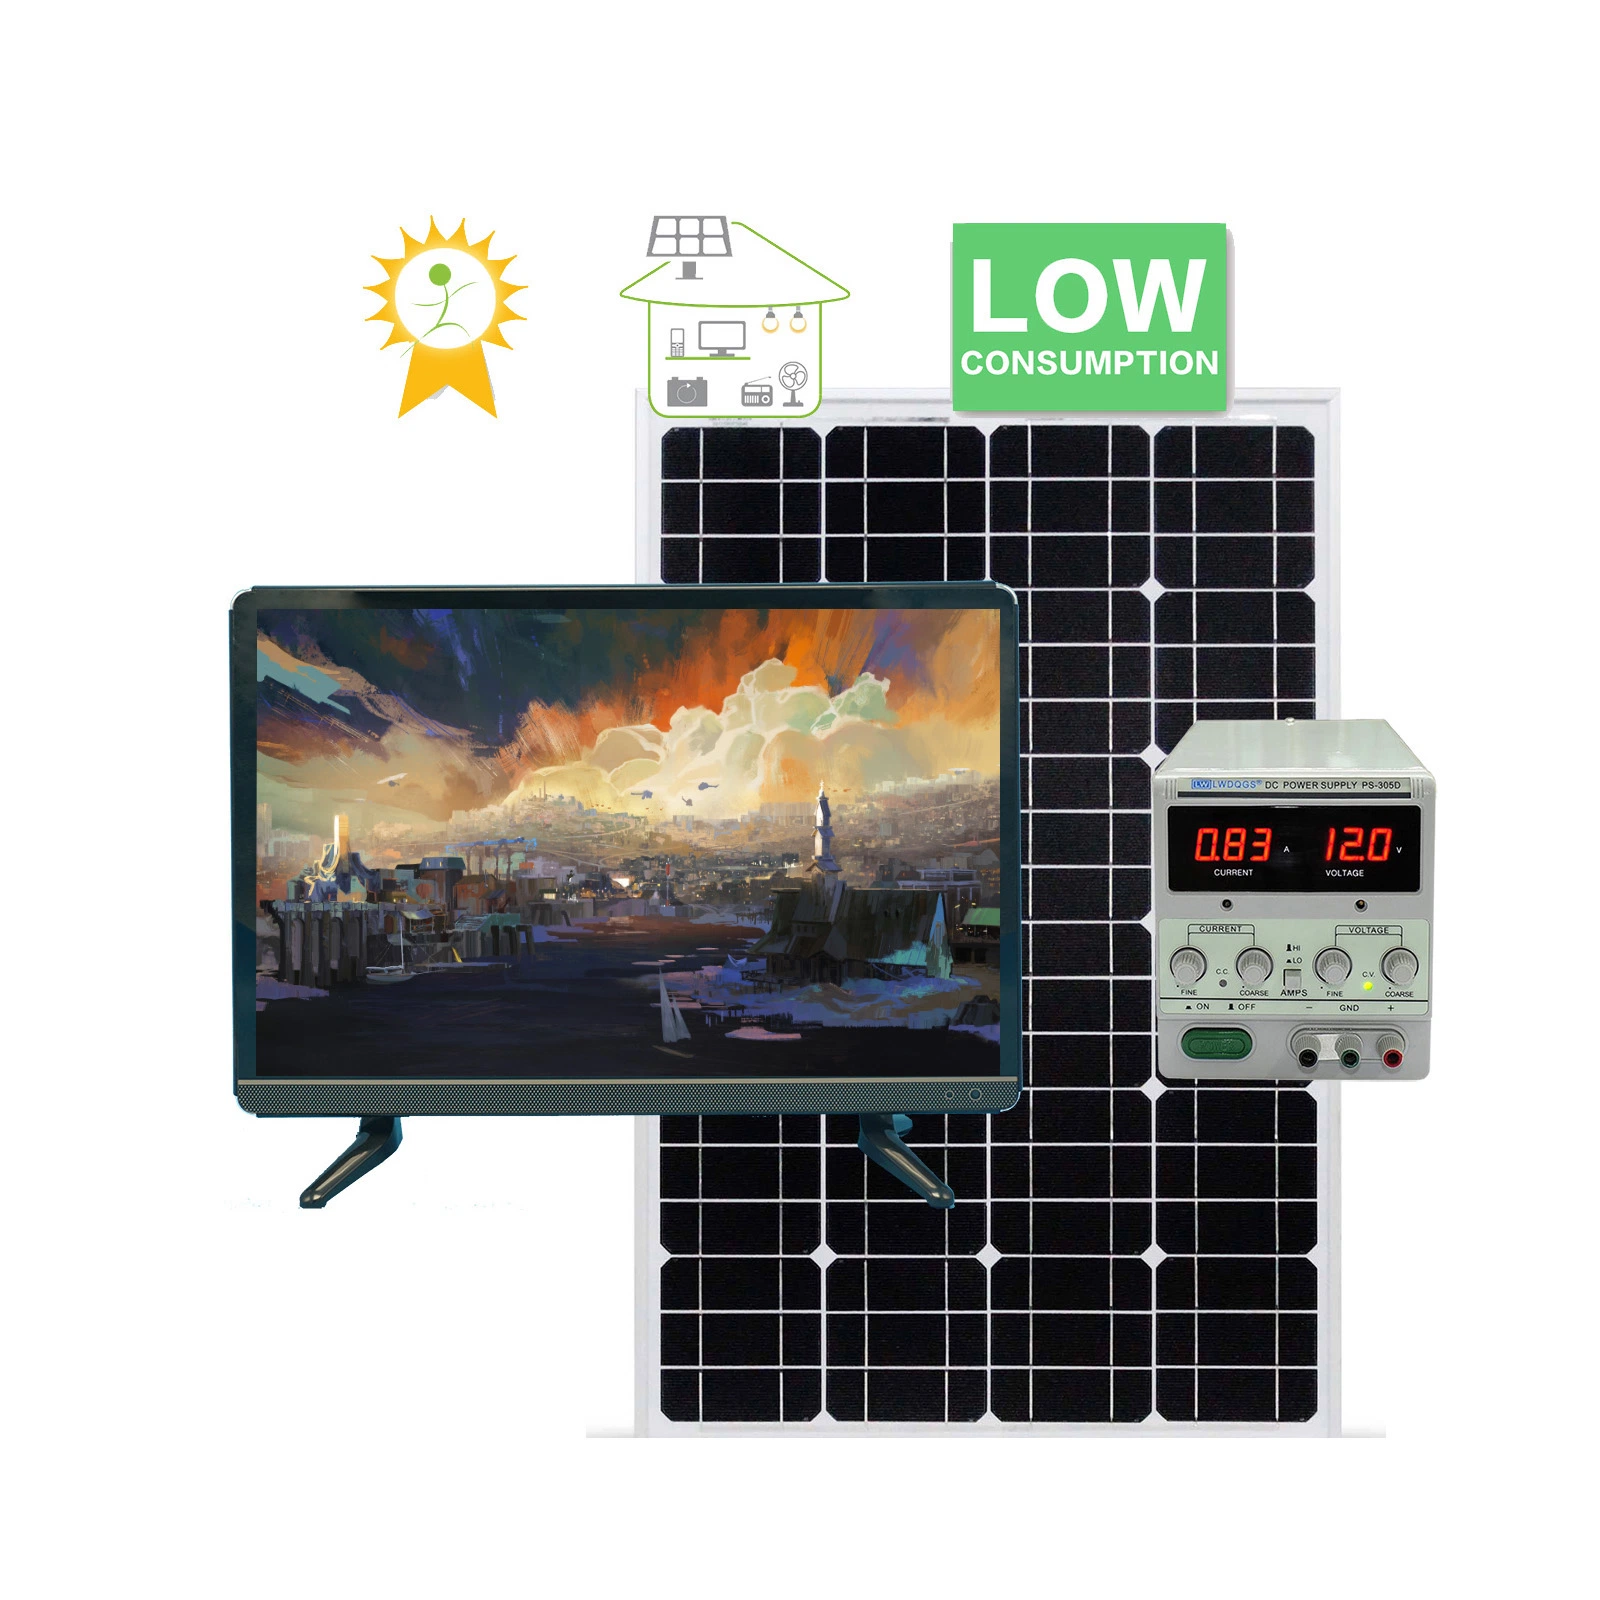 LED TV Factory OEM Manufacturer 15-55" Android TV Smart ТЕЛЕВИЗОР DVB-T2